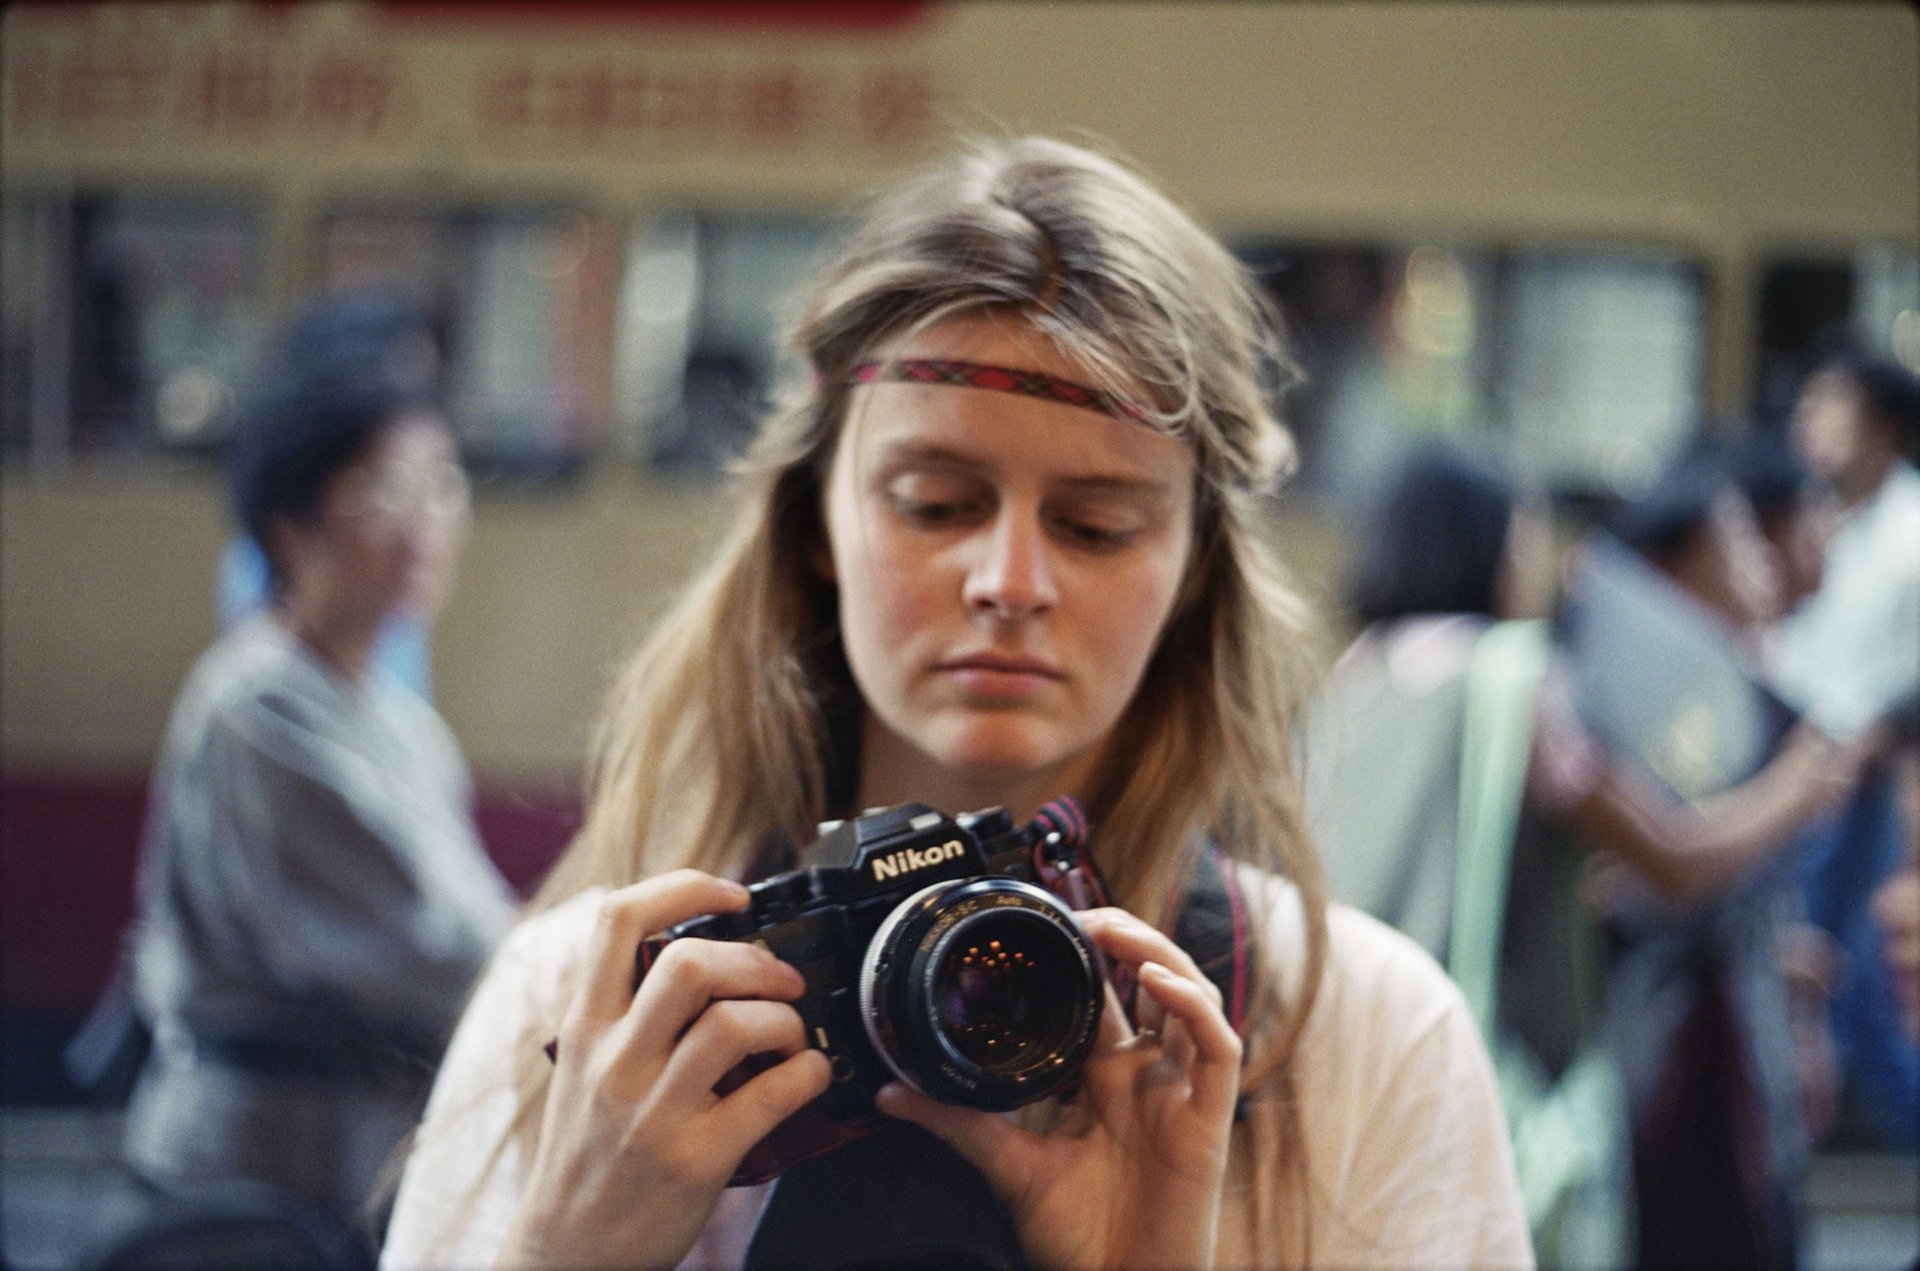 Corinne holding a camera